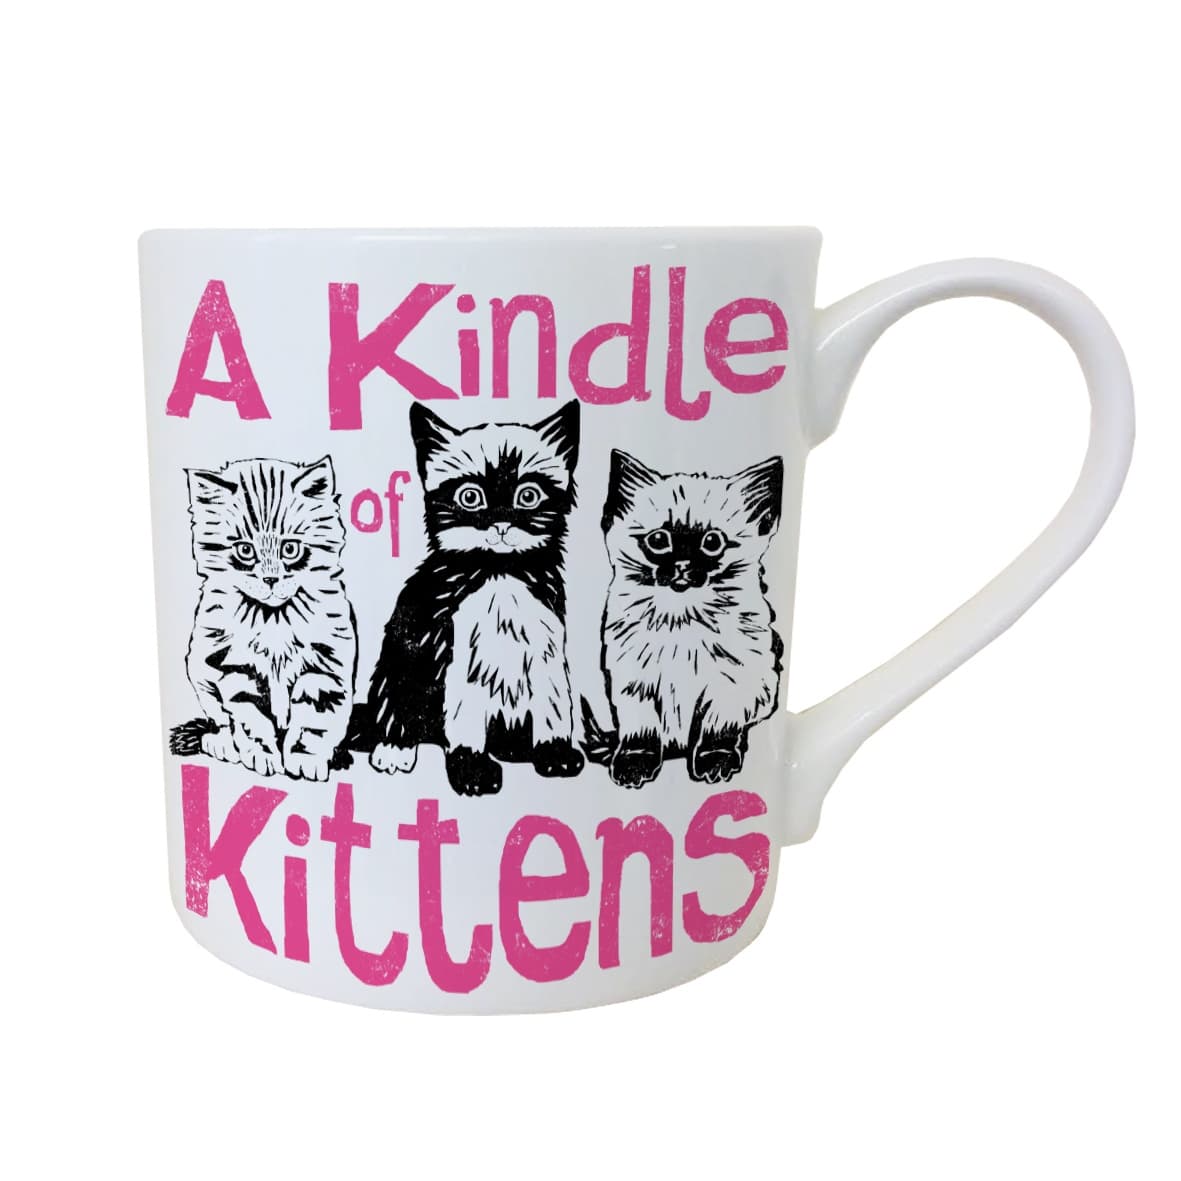 Kindle of Kittens mug